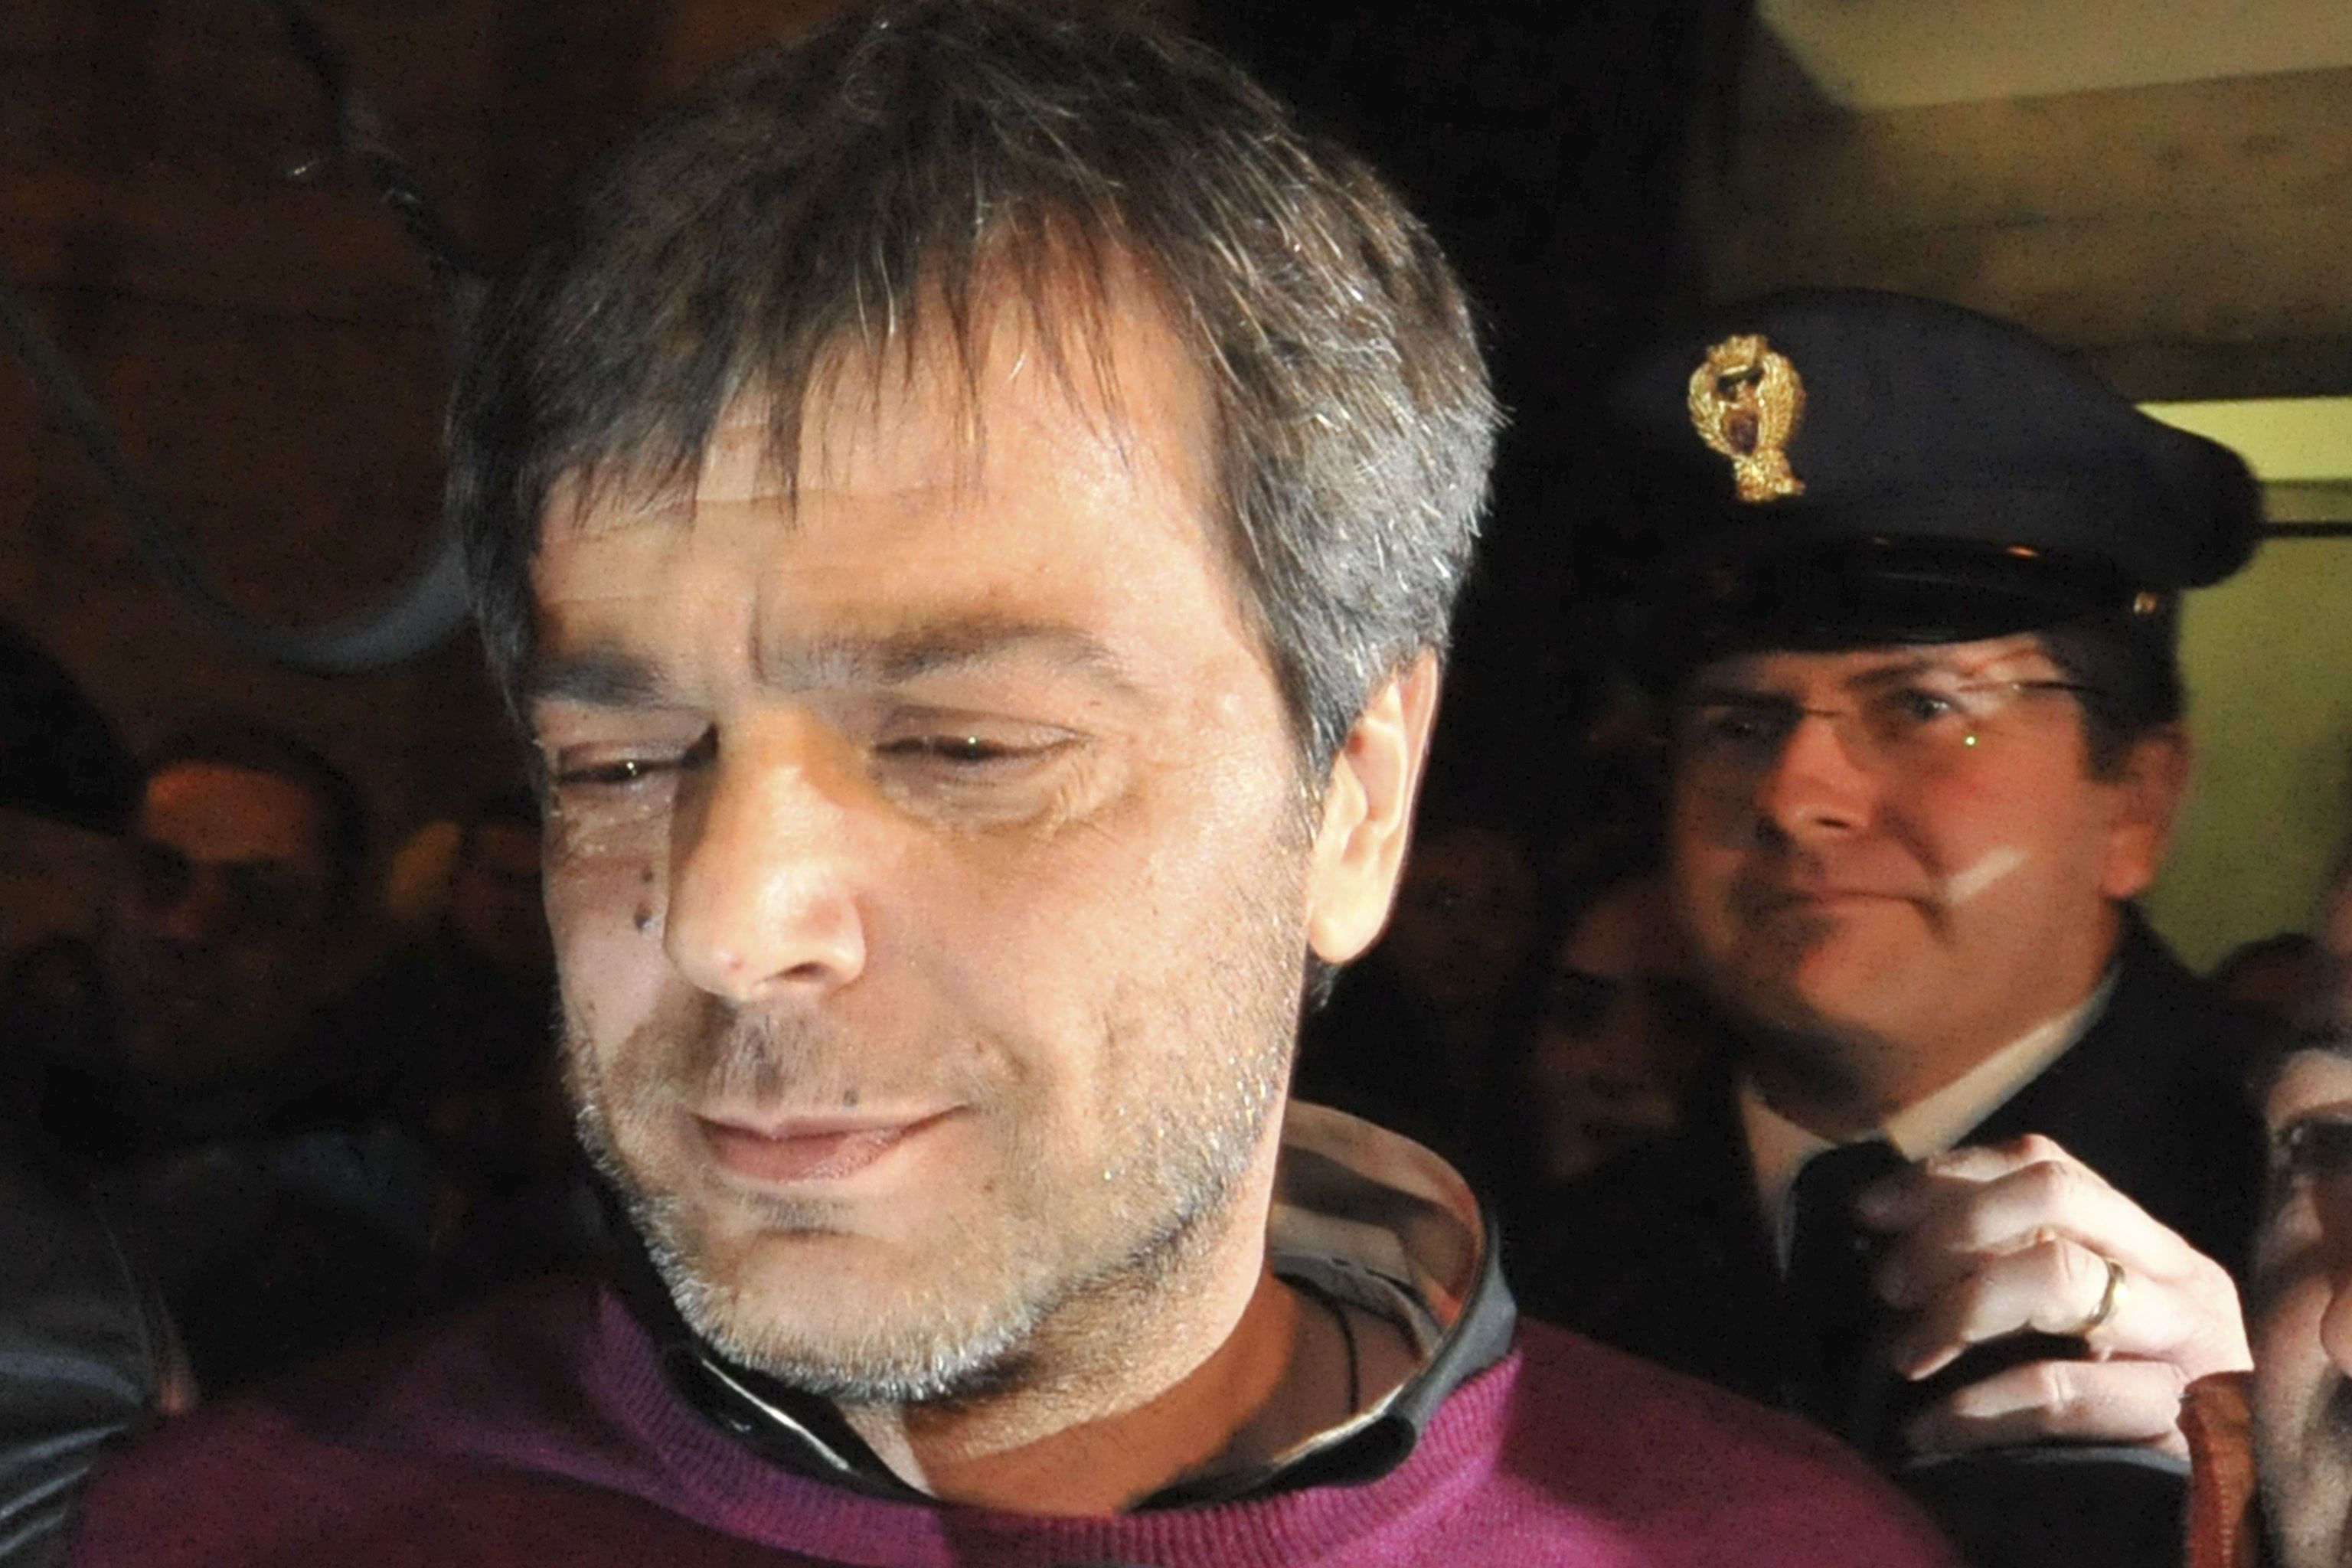 Las revelaciones de un jefe de la Camorra amenazan a la mafia napolitana